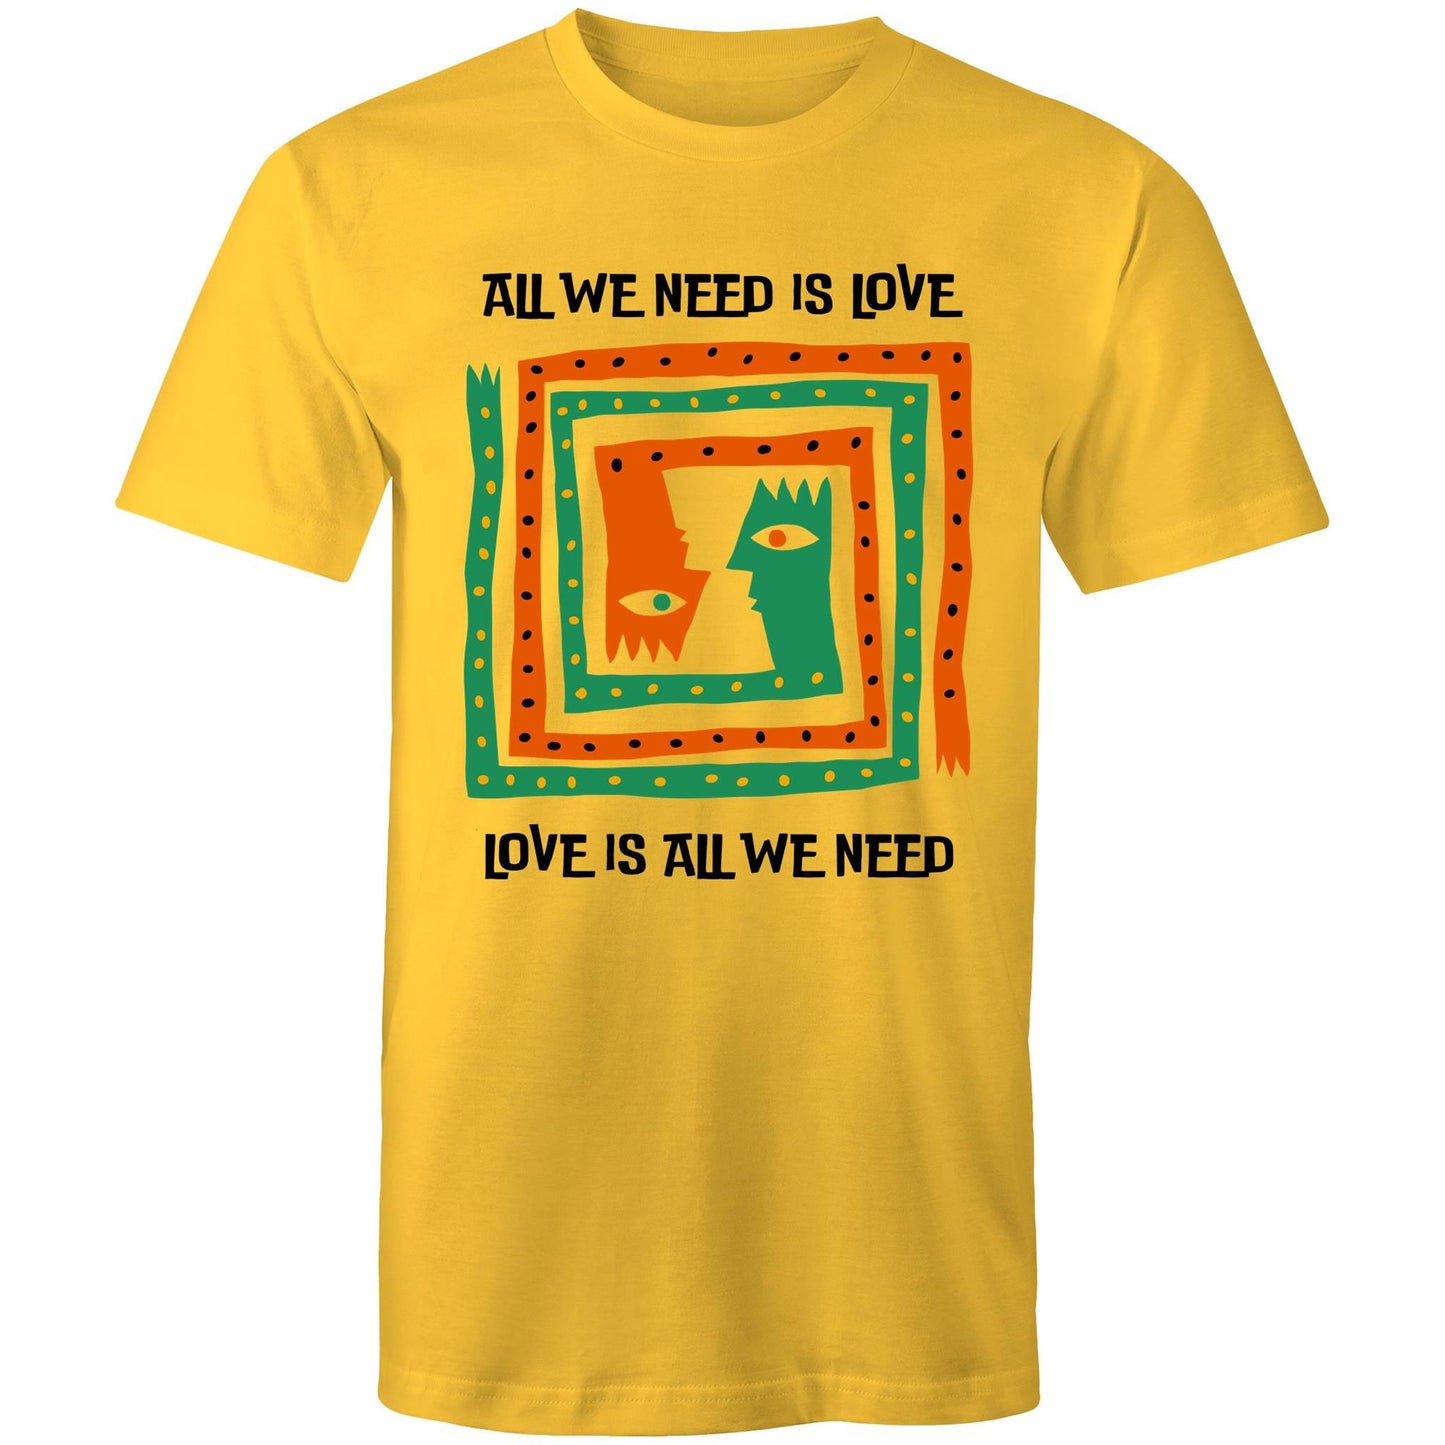 All We Need Is Love - Mens T-Shirt Yellow Mens T-shirt